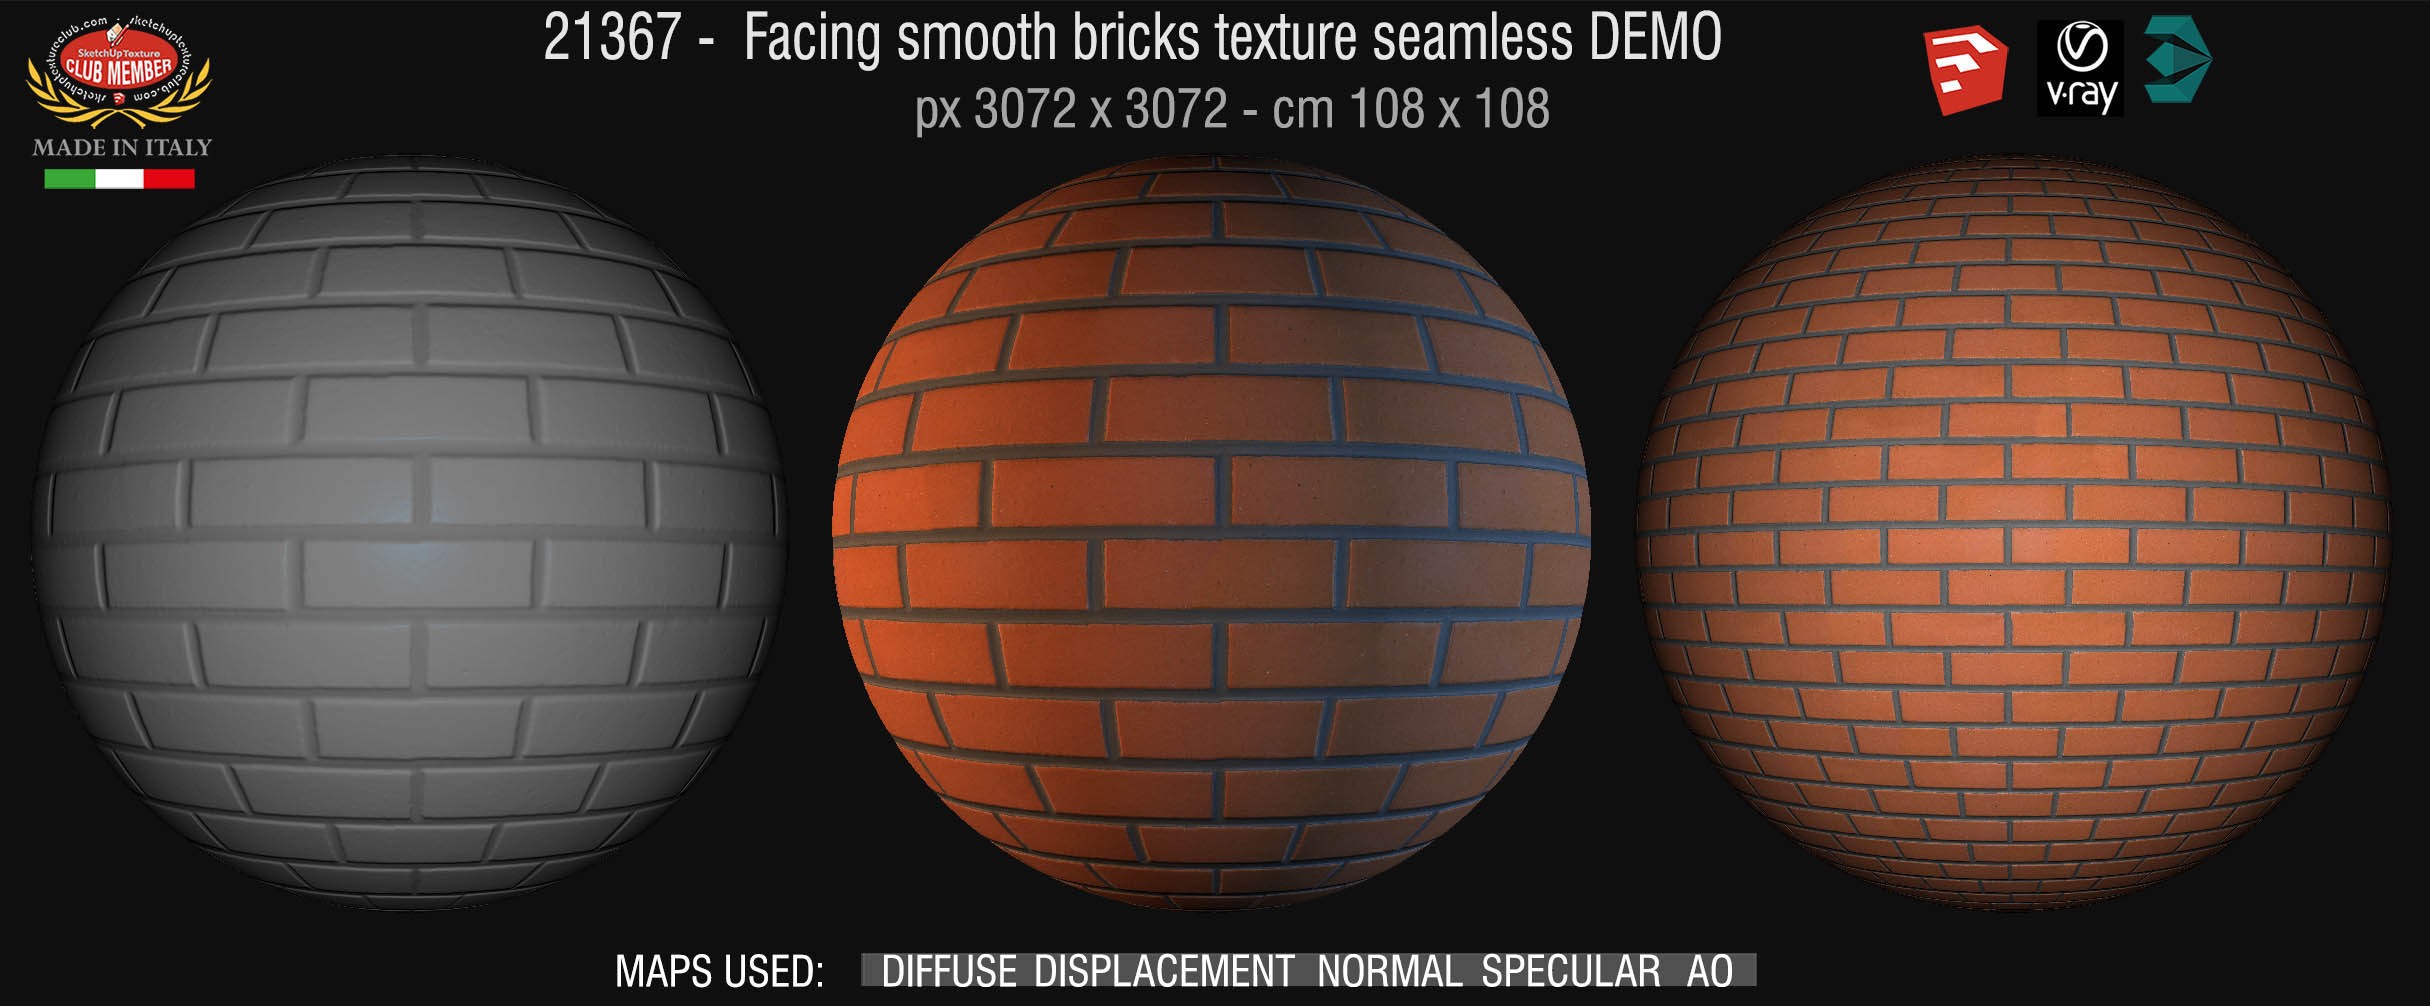 21367 facing smooth bricks texture seamless + maps DEMO